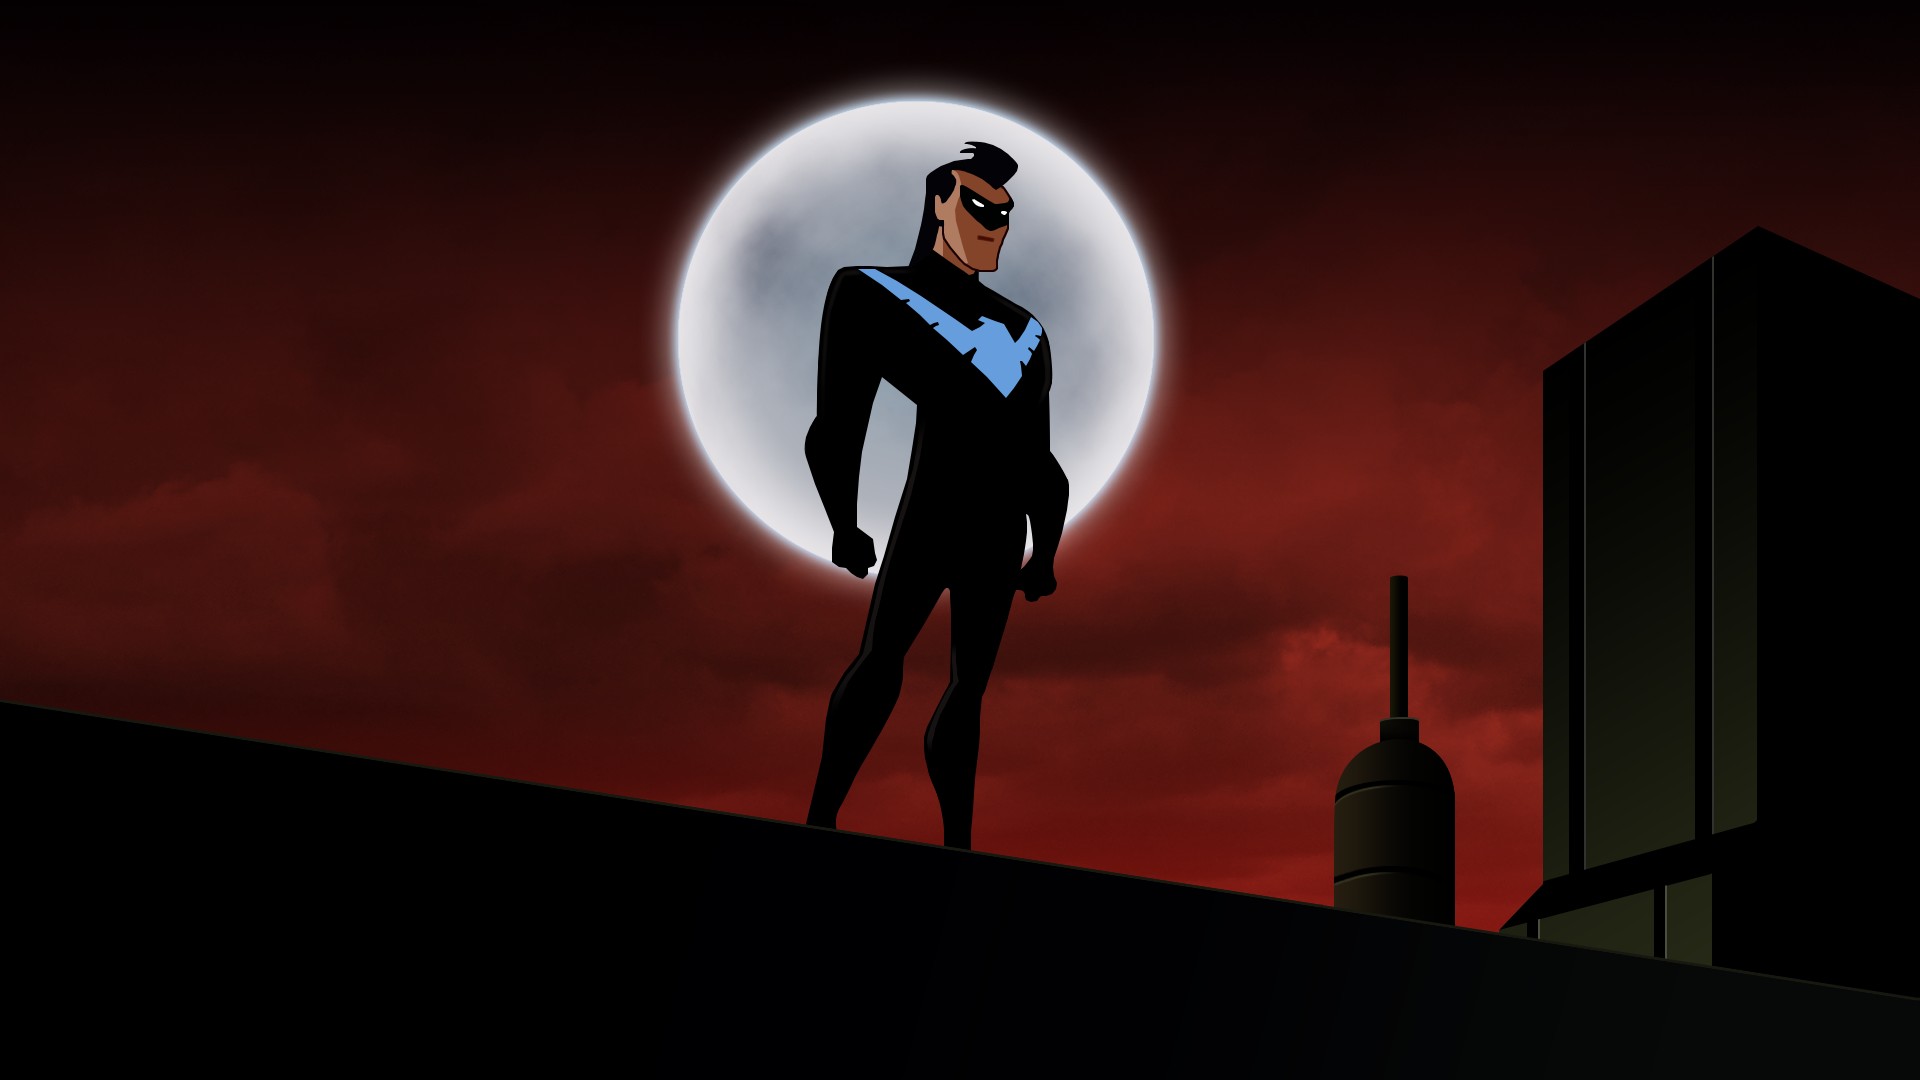 Dick Grayson Nightwing Dc Comics Warner Brothers Batman The Animated Series Batman